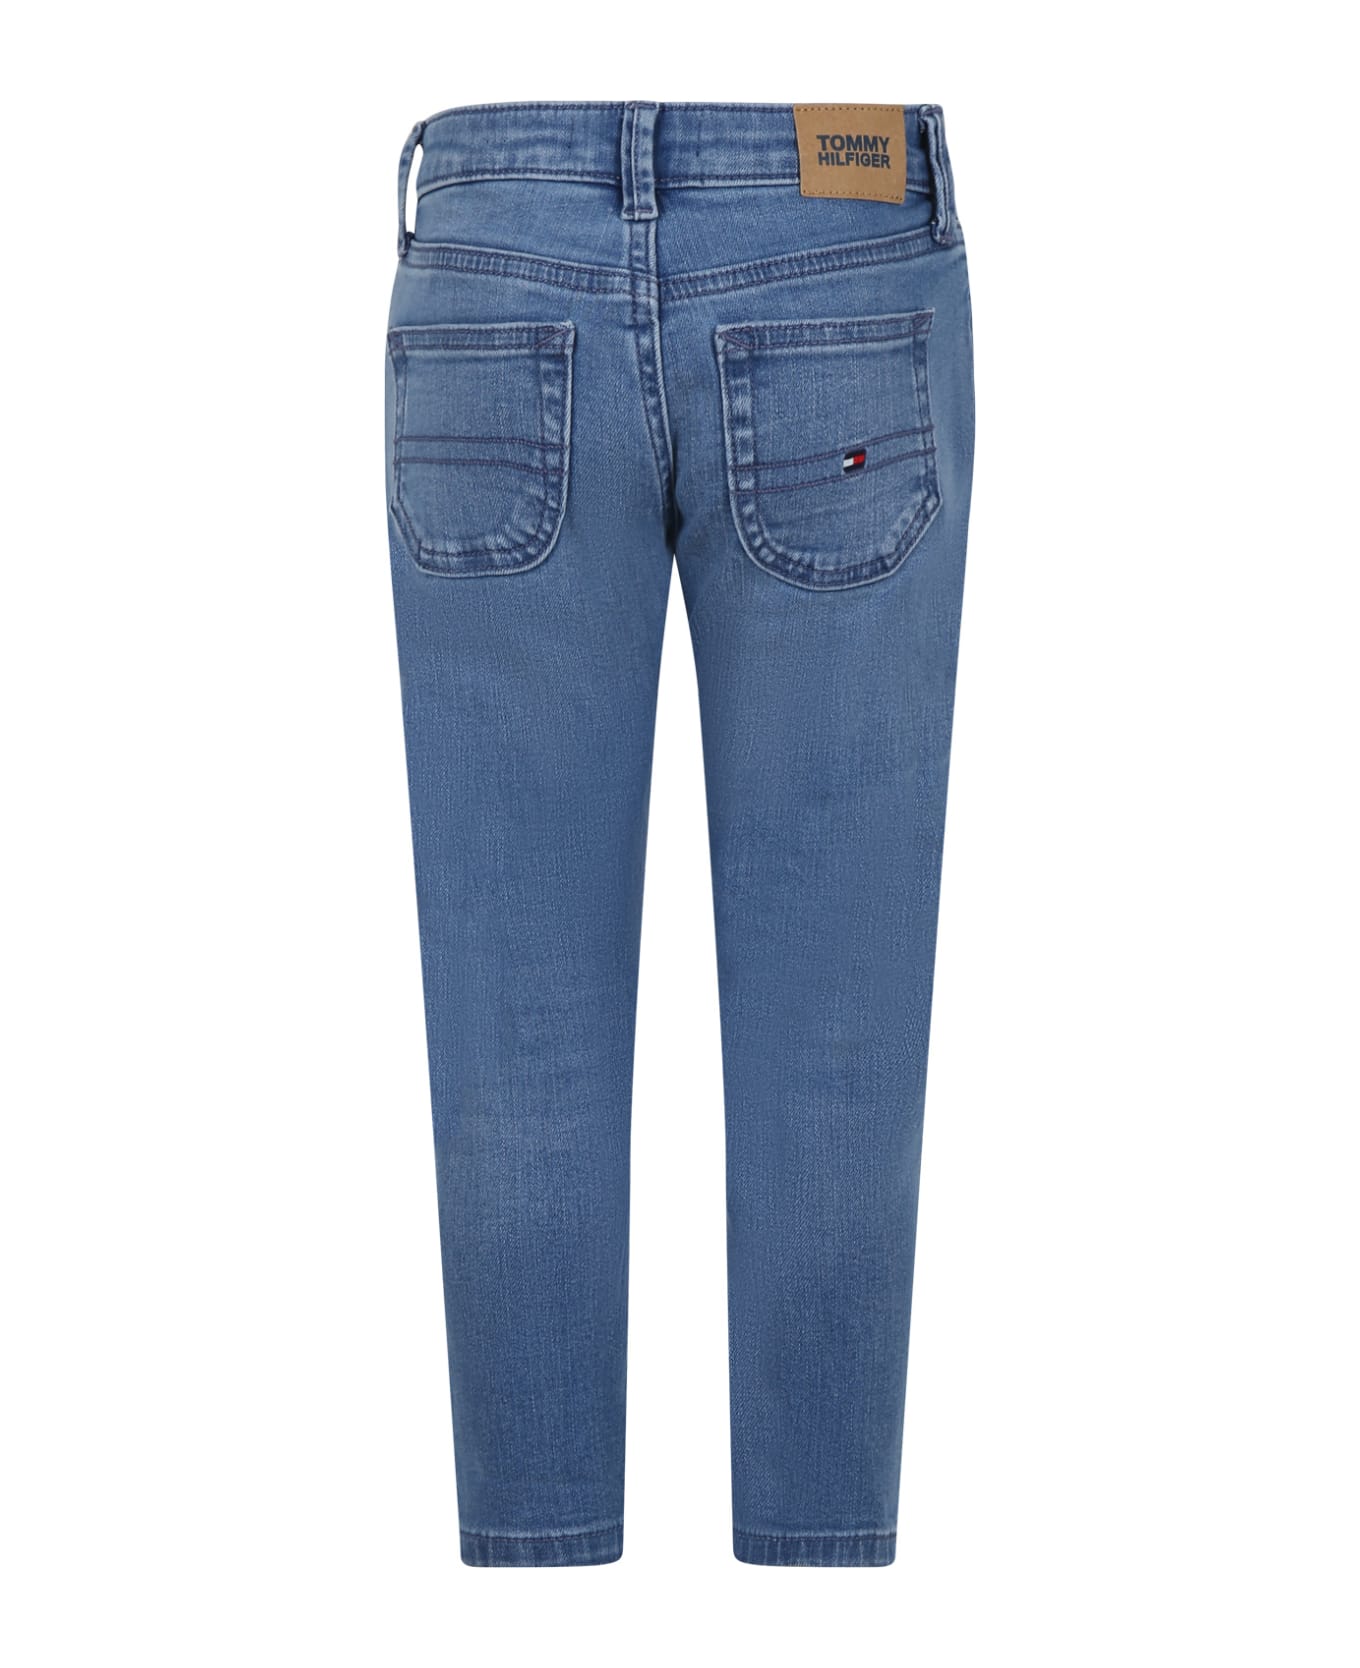 Tommy Hilfiger Denim Jeans For Boy With Logo - Denim